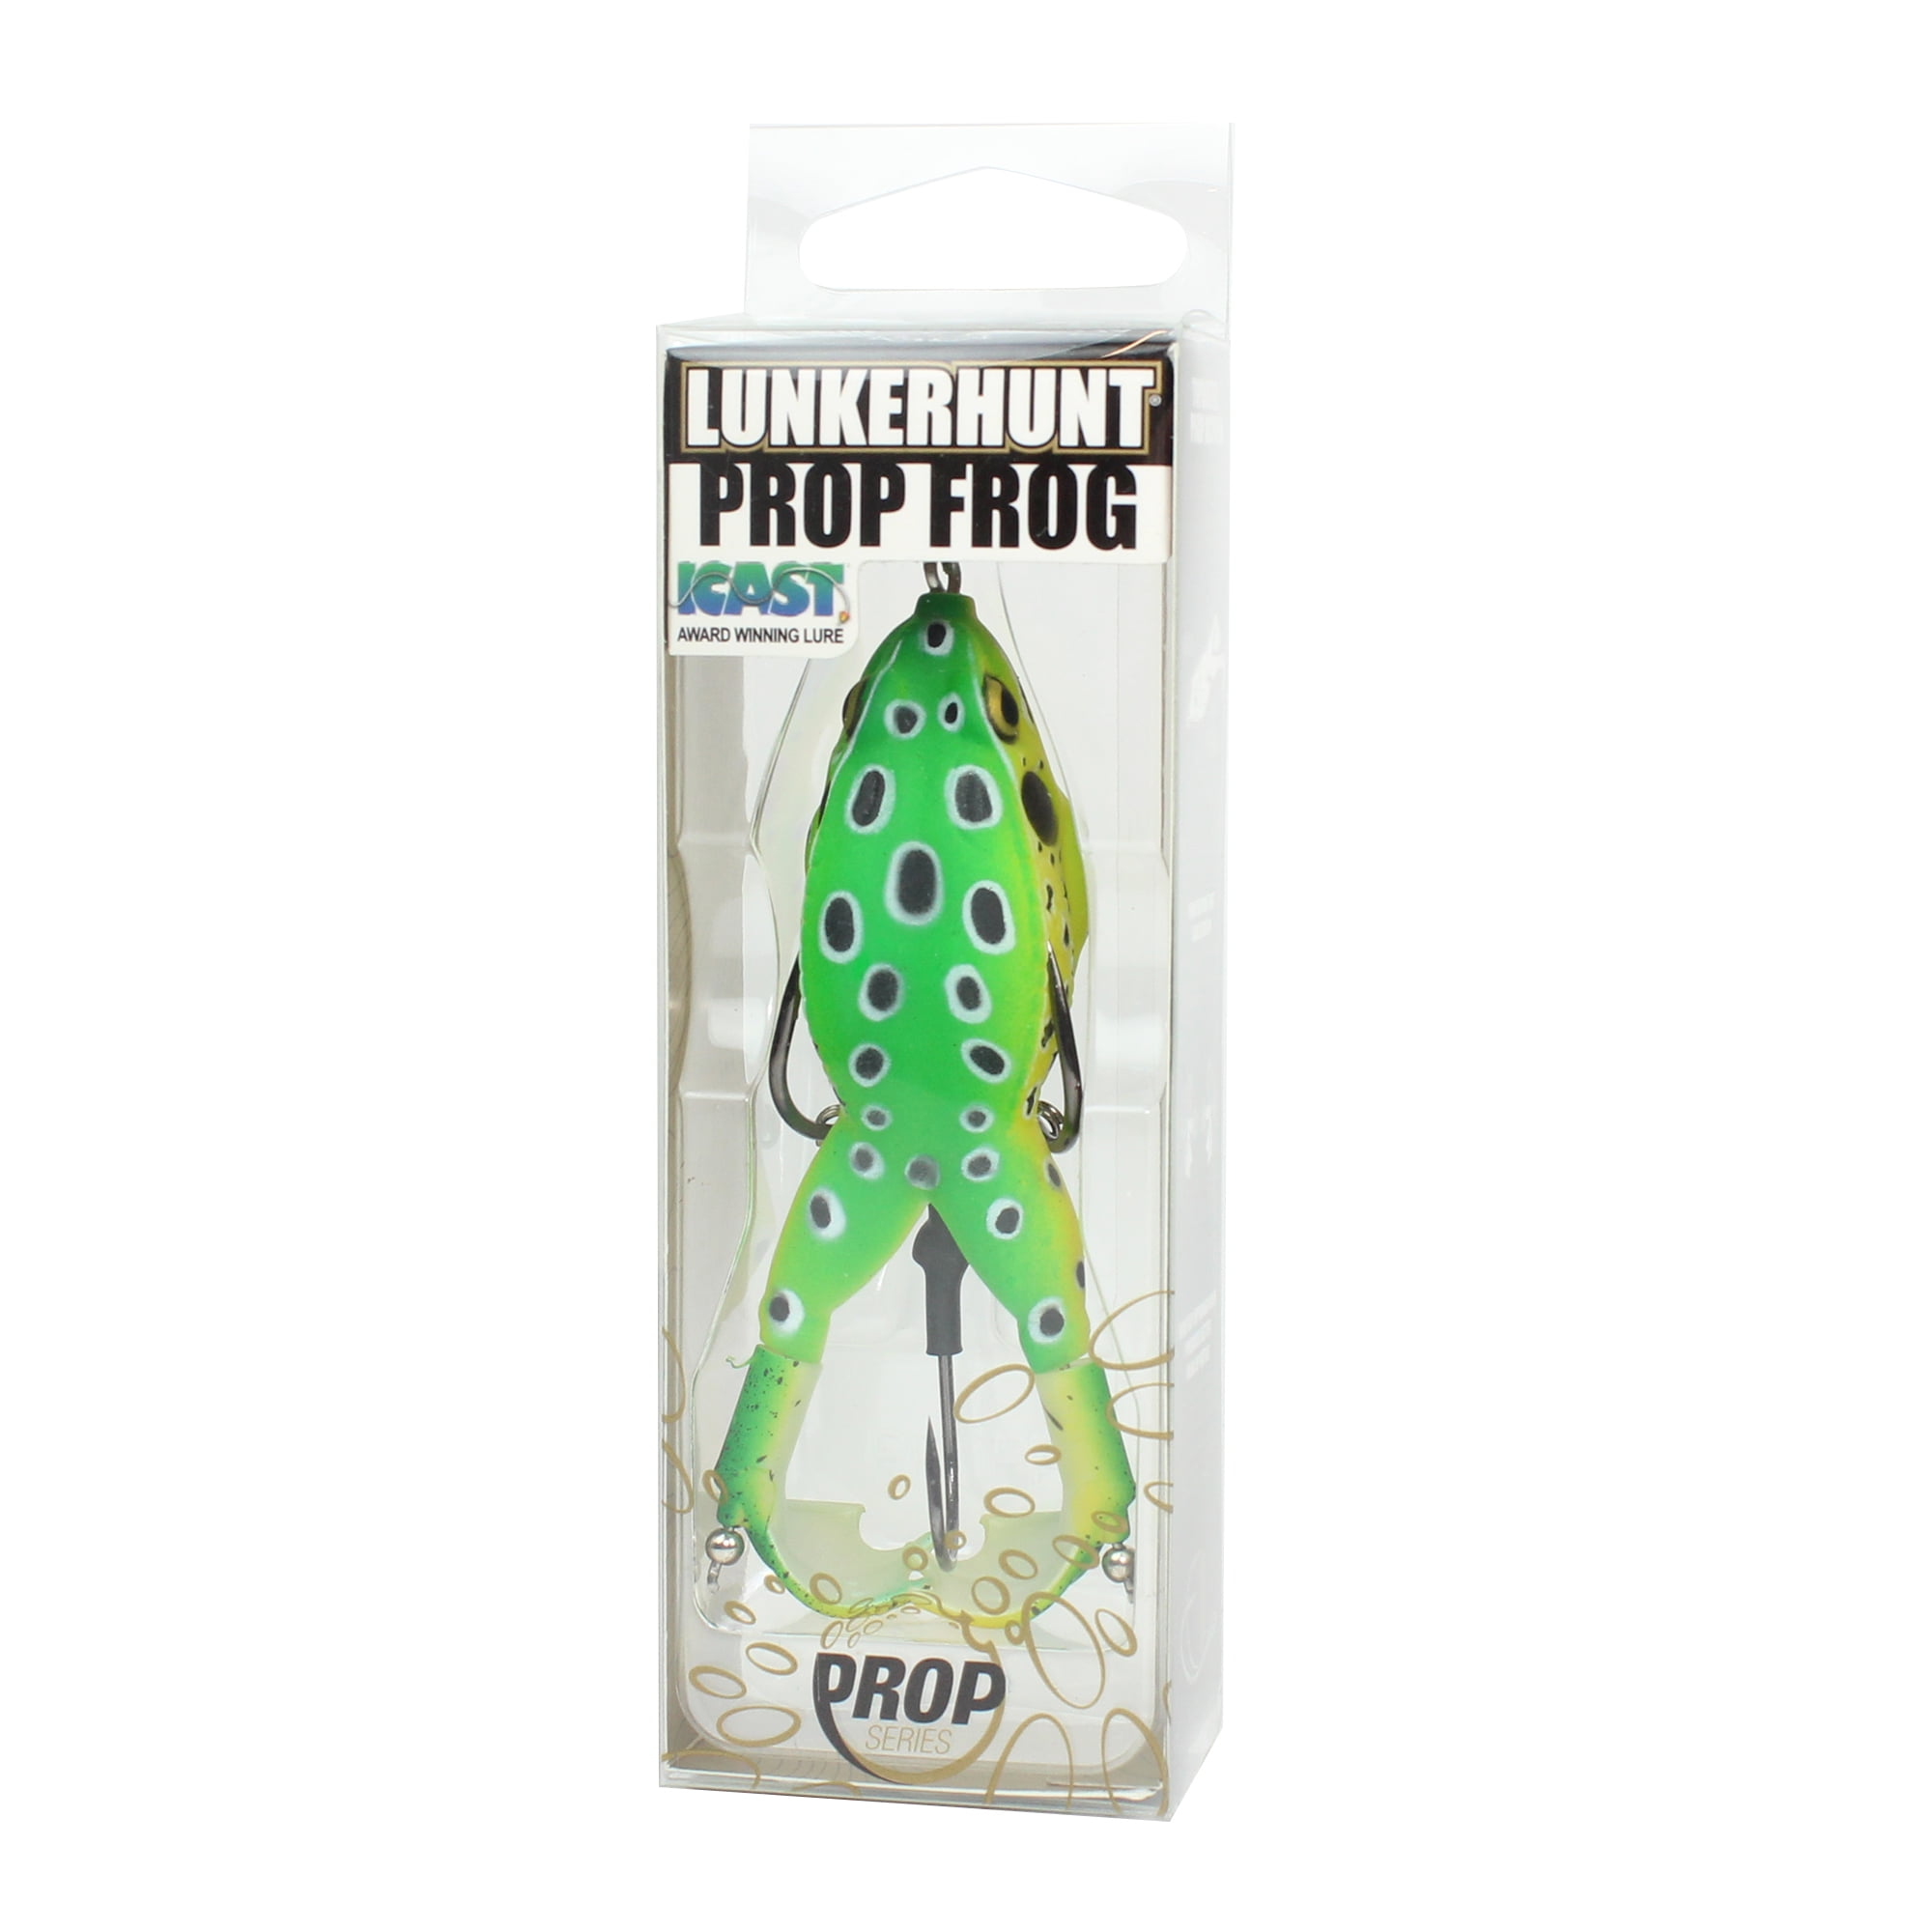 Lunkerhunt Prop Frog - Topwater Lure - Green Tea,3.5in,1/2oz,Soft Baits,Fishing  Lures 